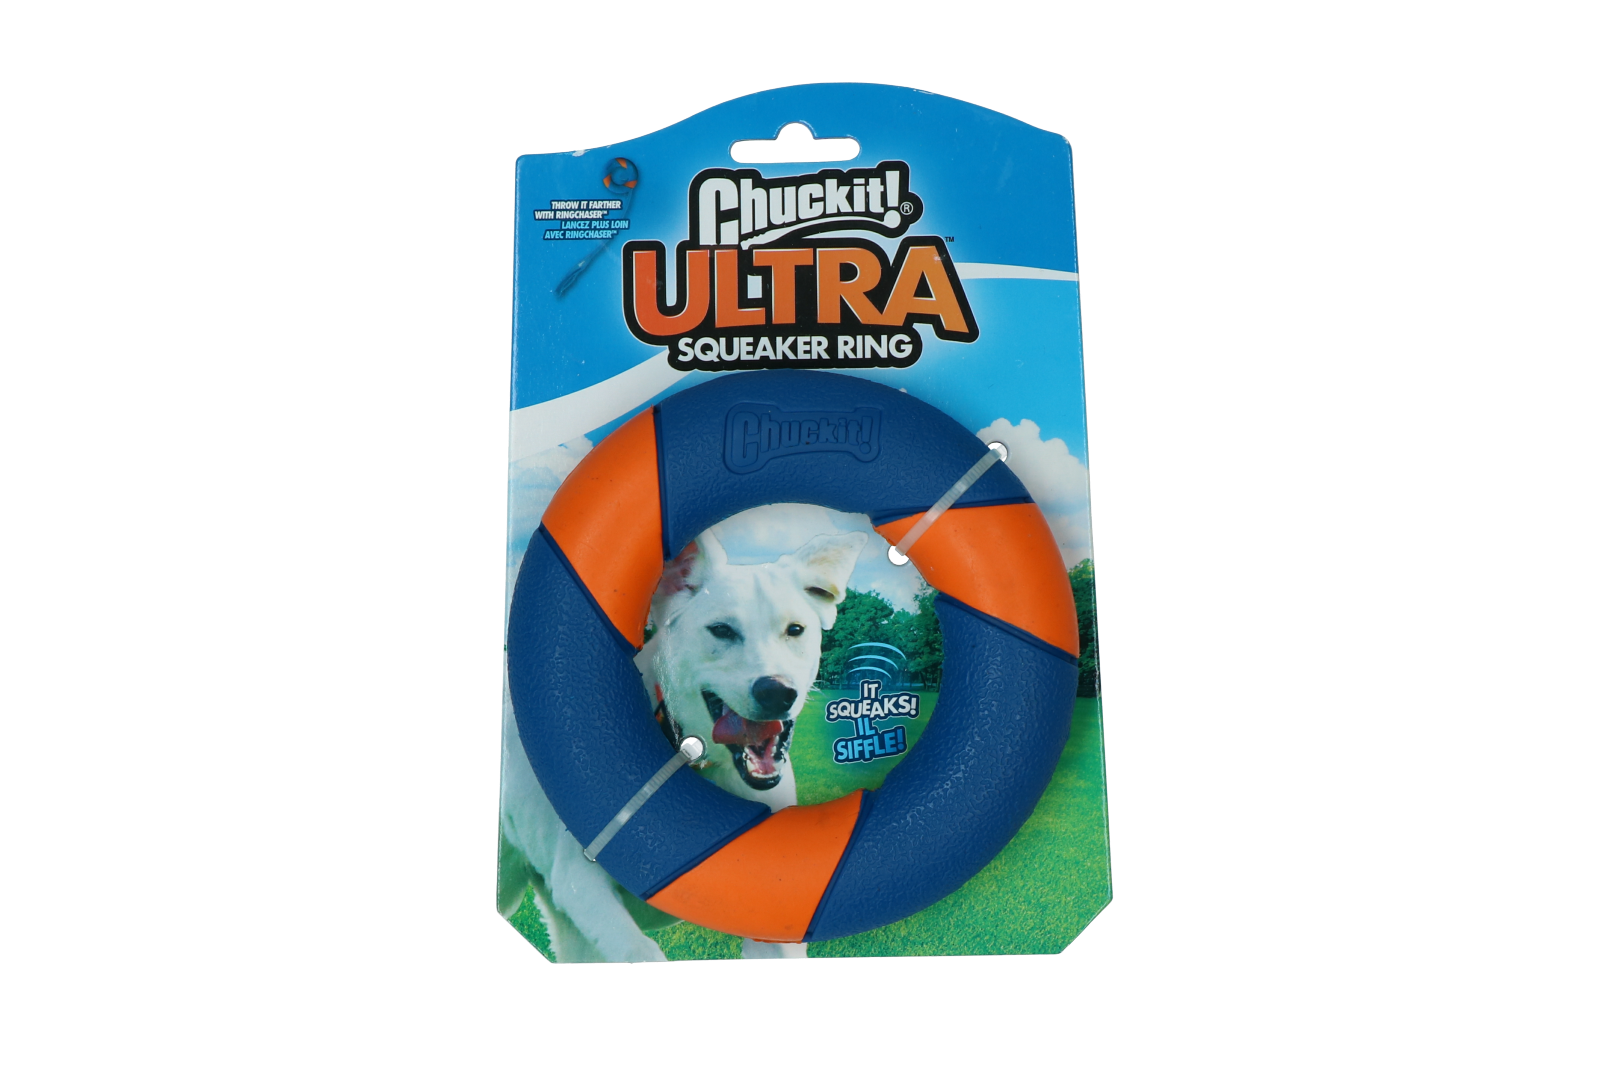 Ultra Squeaker Ring - Verpackung